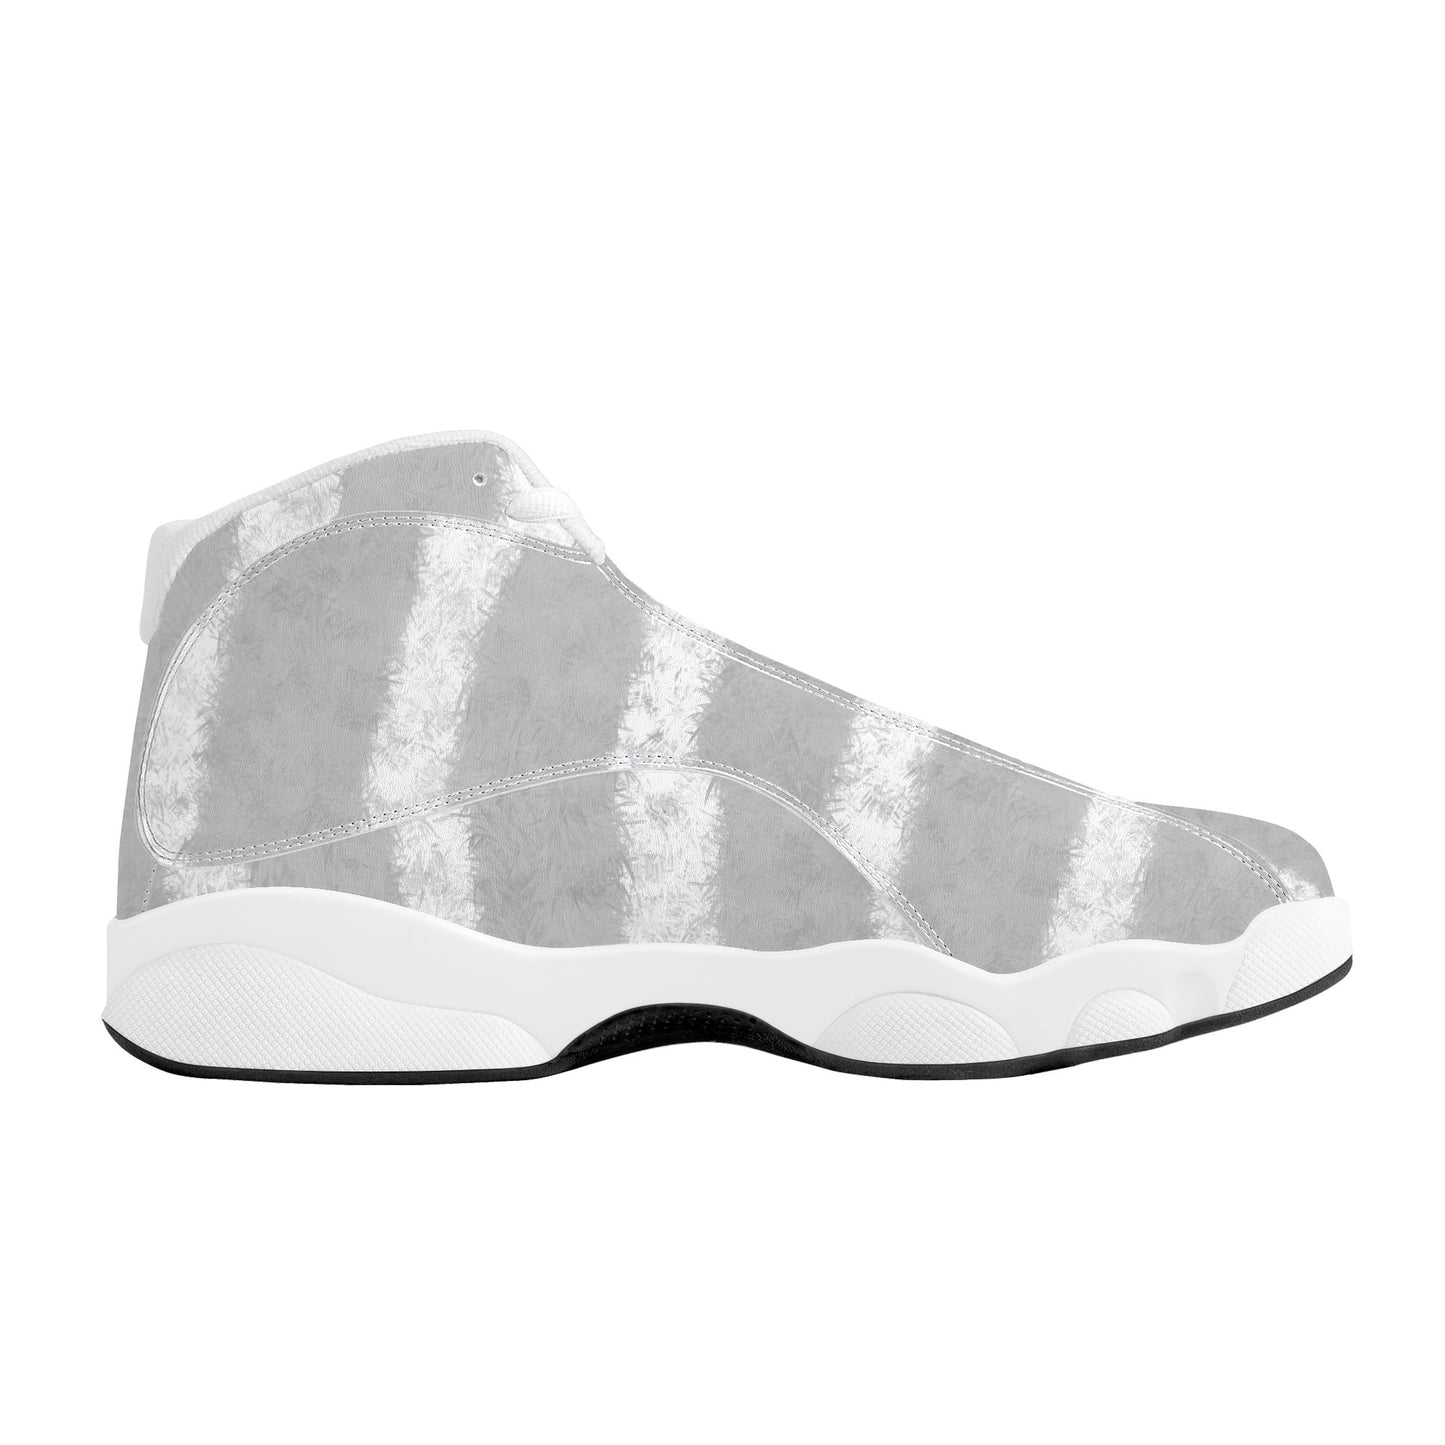 "Nix Plume" Basketball Shoes